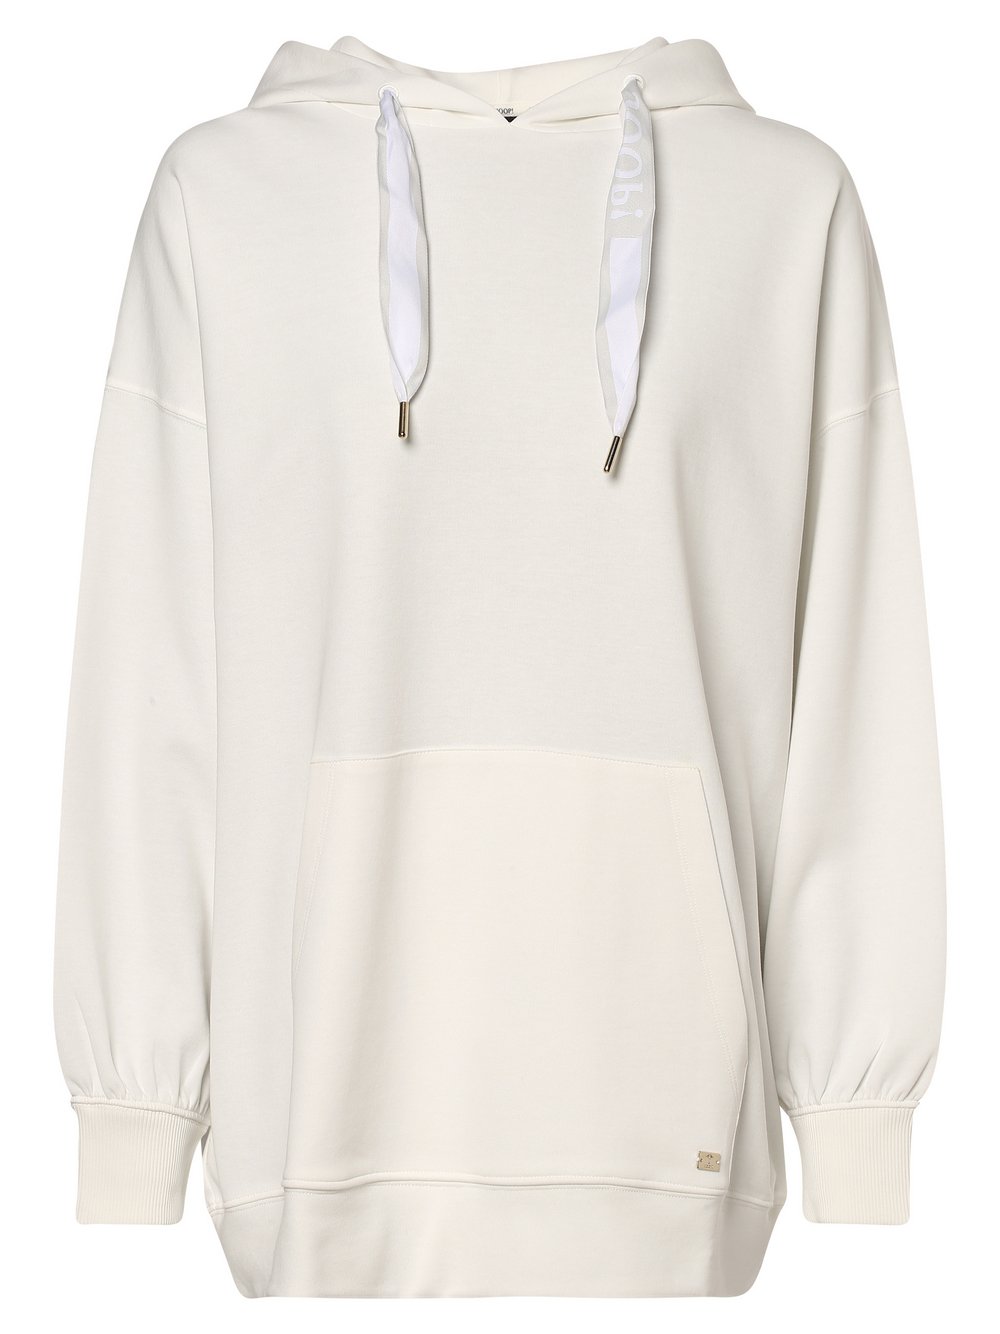 Joop - Damska bluza z kapturem, biały